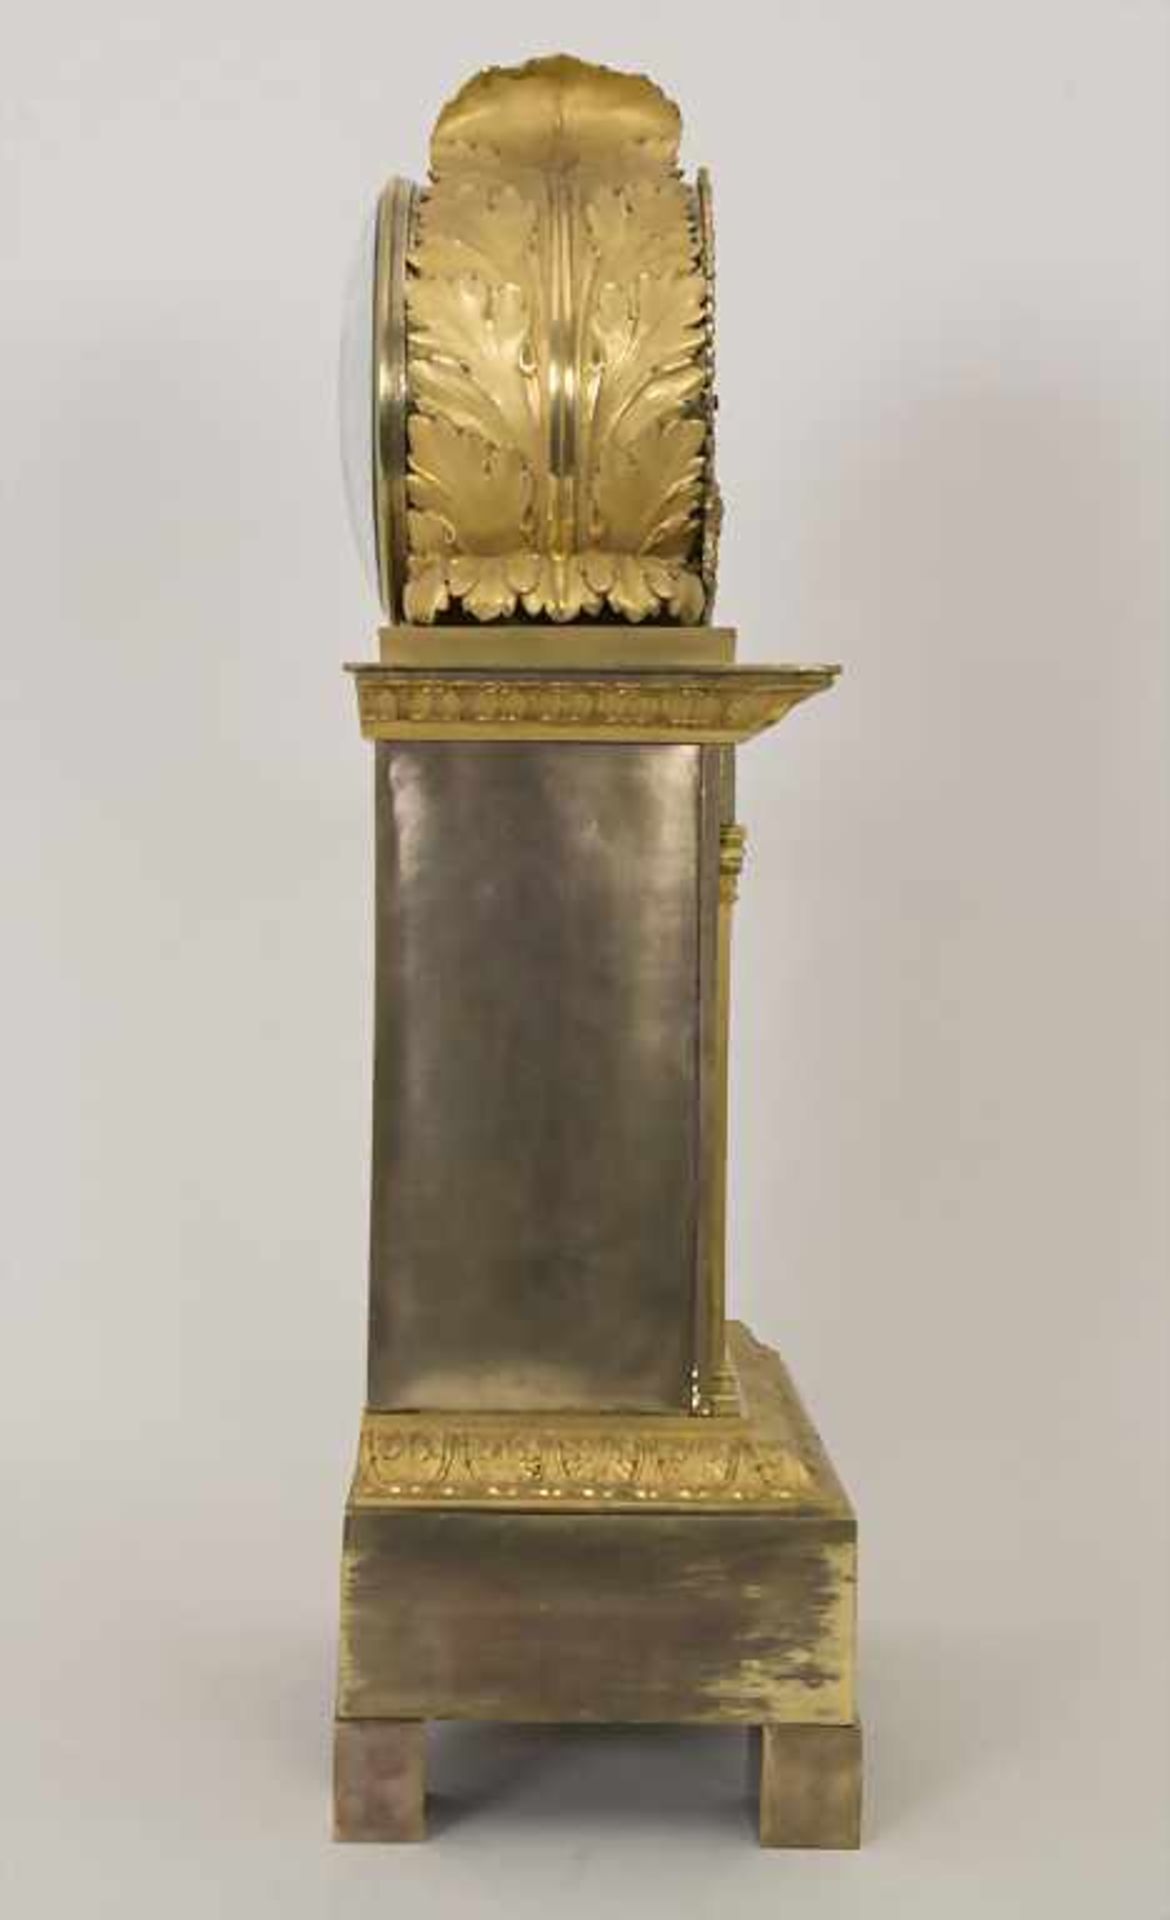 Empire Pendule 'Die Künste' / An Empire clock 'The fine arts', Paris, um 1800 - Image 4 of 11